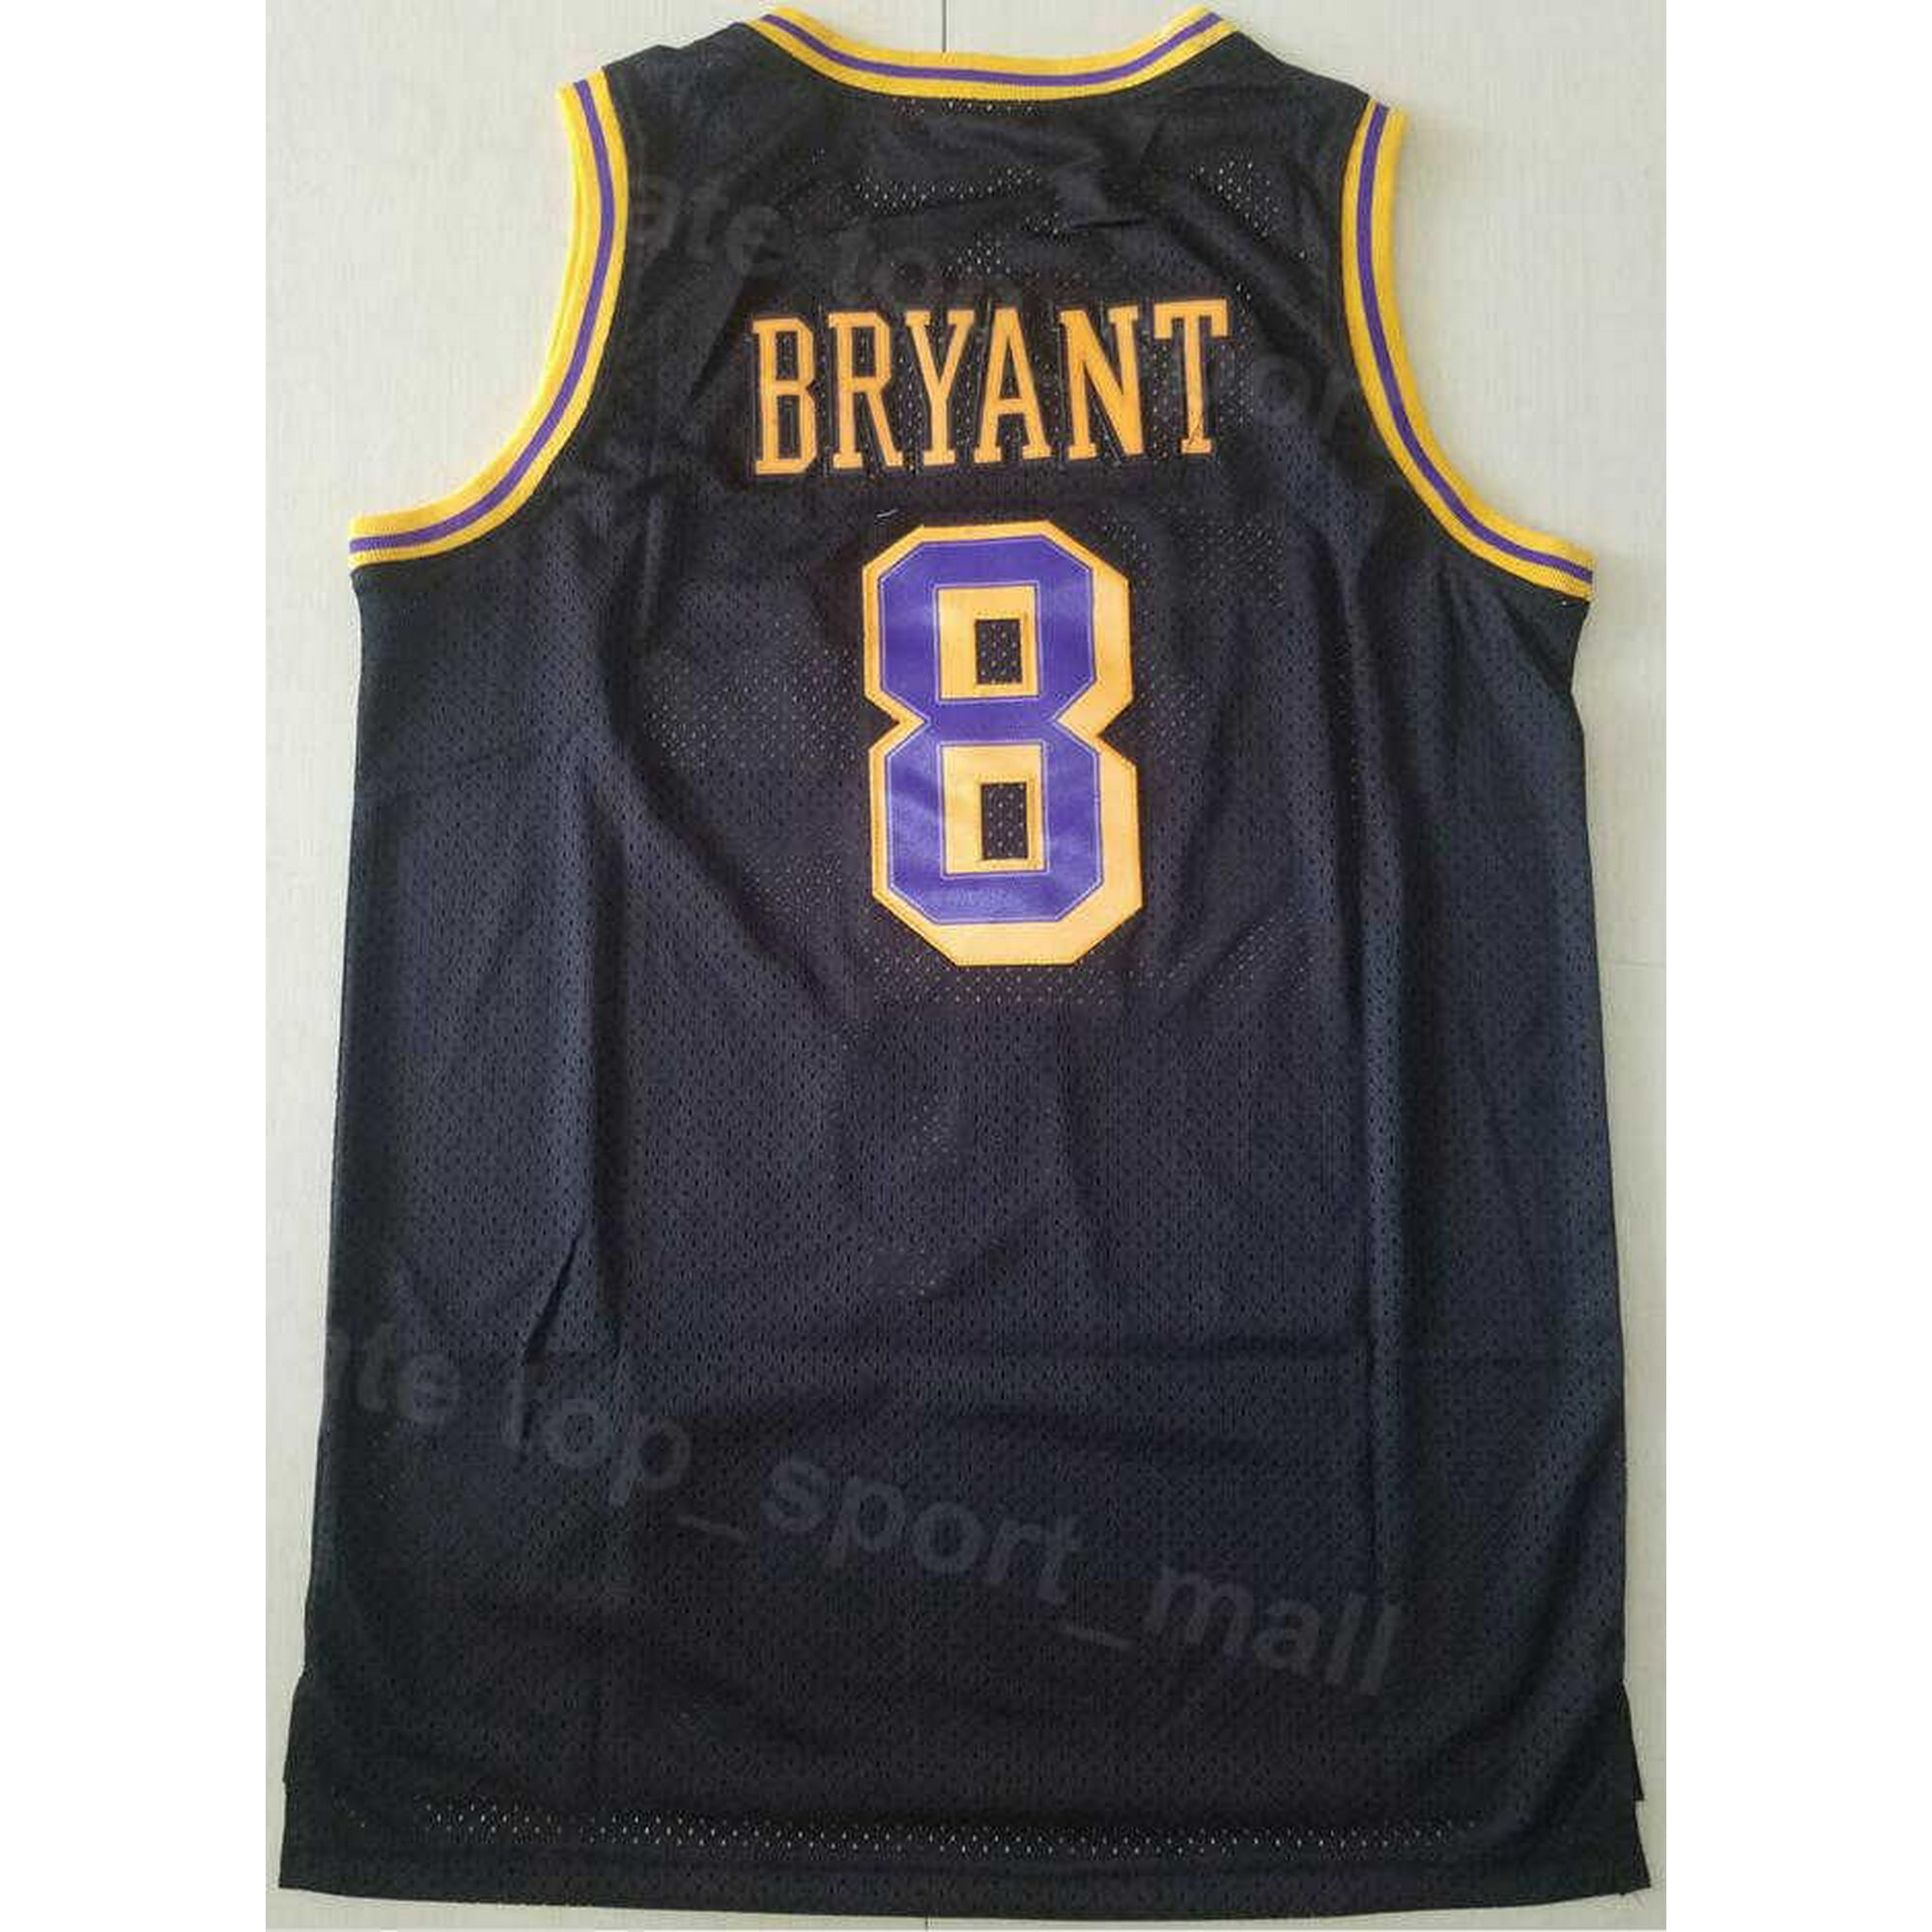 Kobe Bryant Stitched Jersey Men's NBA Jersey Classic Edition